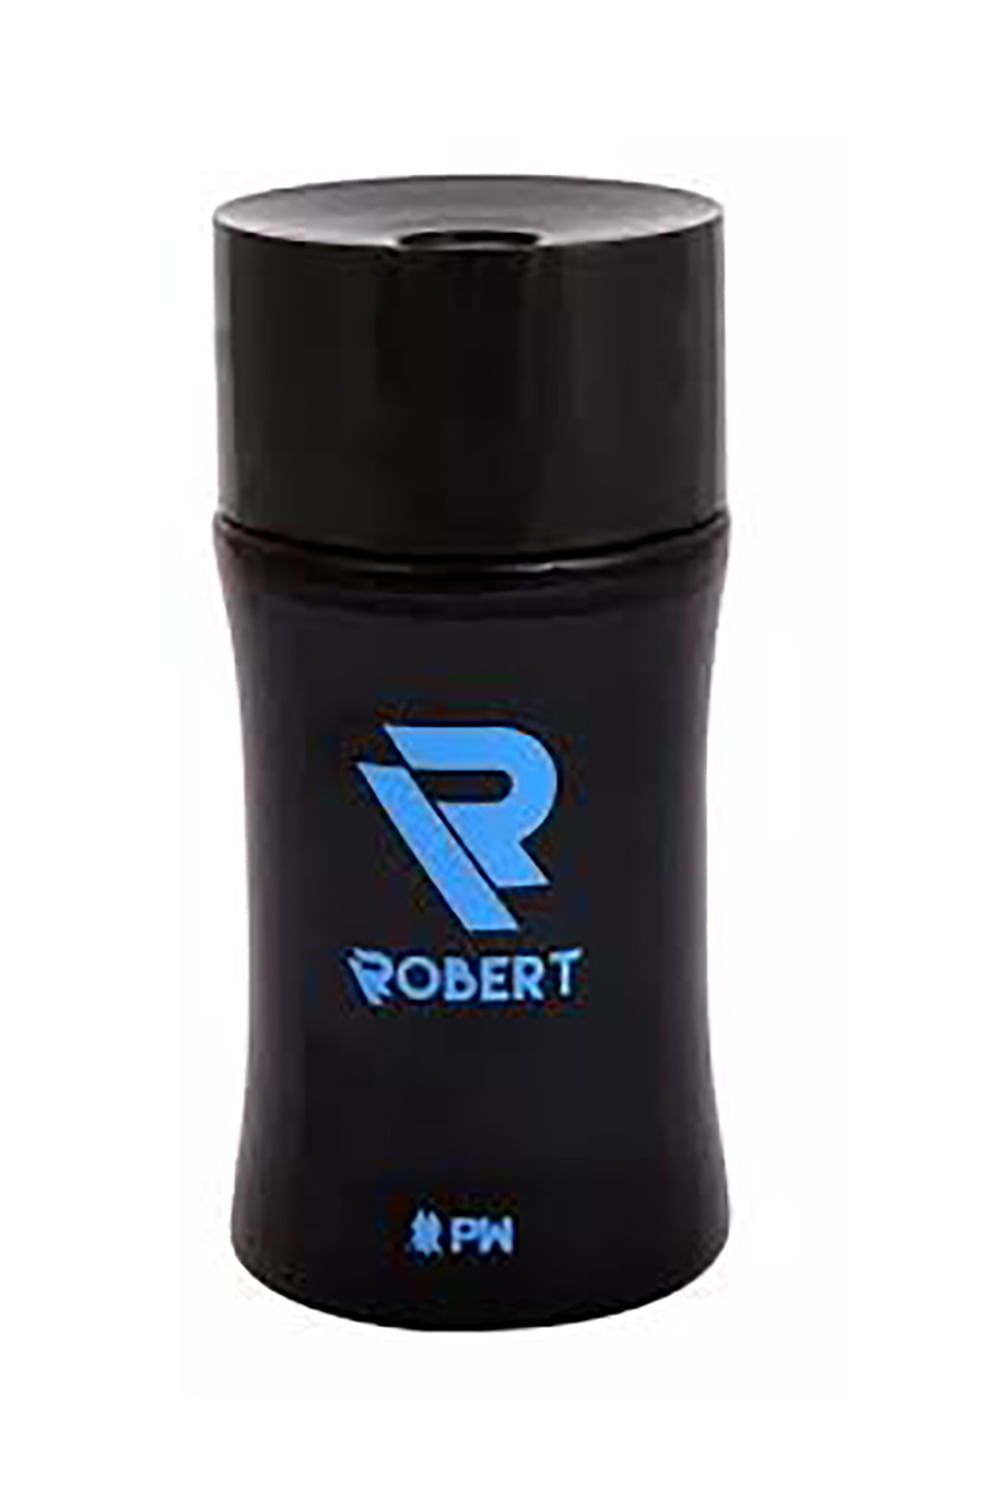 Perfume Robert Polo Wear, 100 Ml